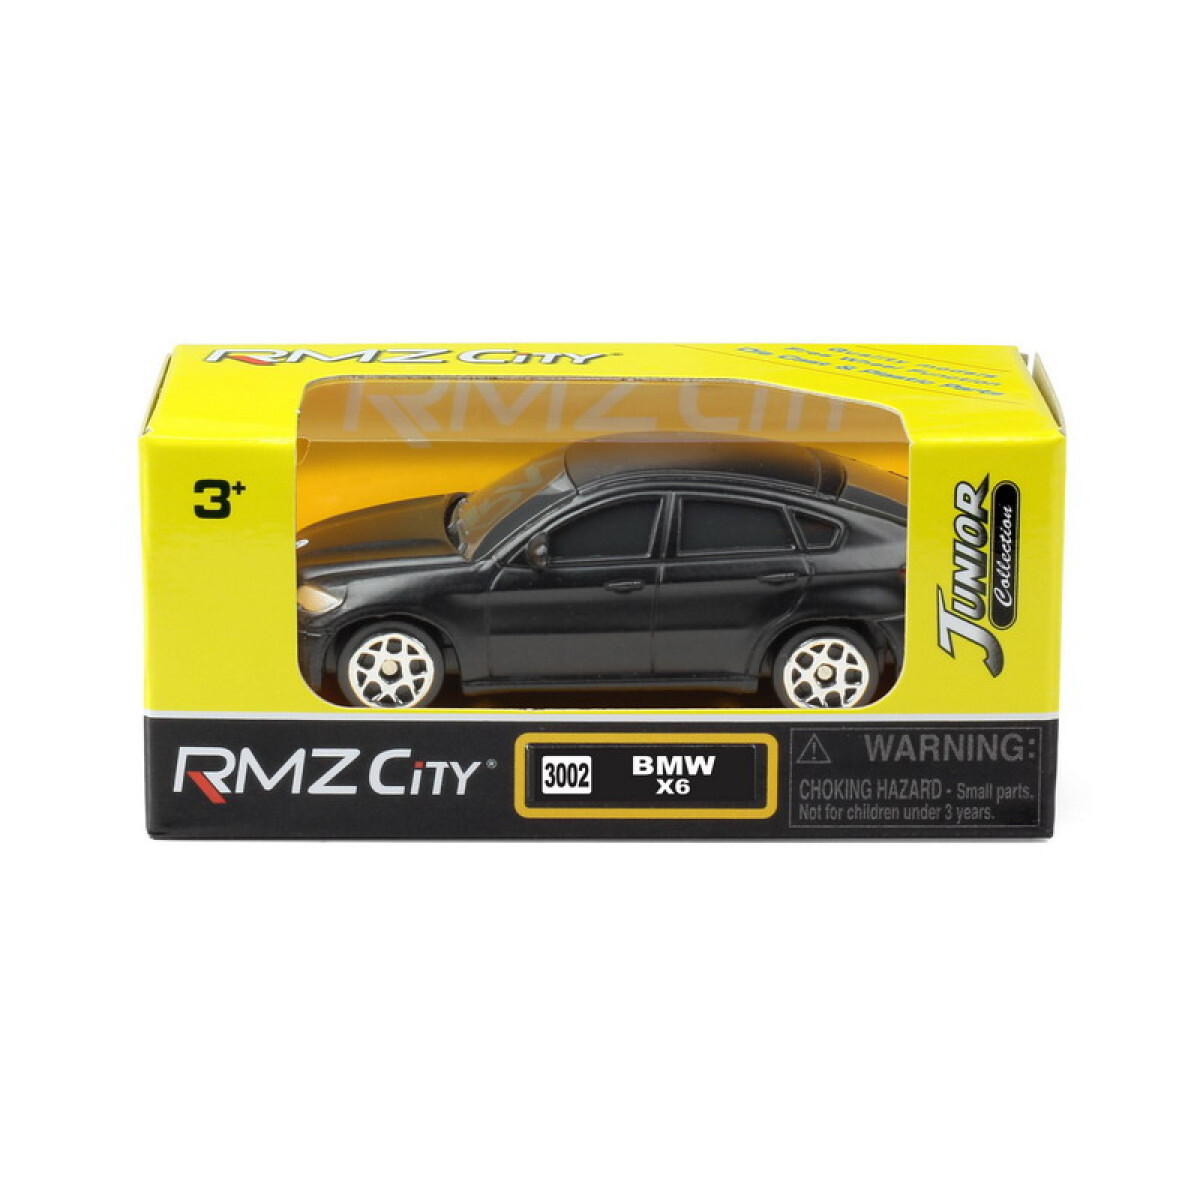 Rmz city. Машина Chevrolet Corvette RMZ City 1:32. RMZ City машинки 1/64. Легковой автомобиль RMZ City BMW m5 (344003s) 1:64 9 см. Модель 1/32 RMZ City Chevrolet Corvette c6-r.